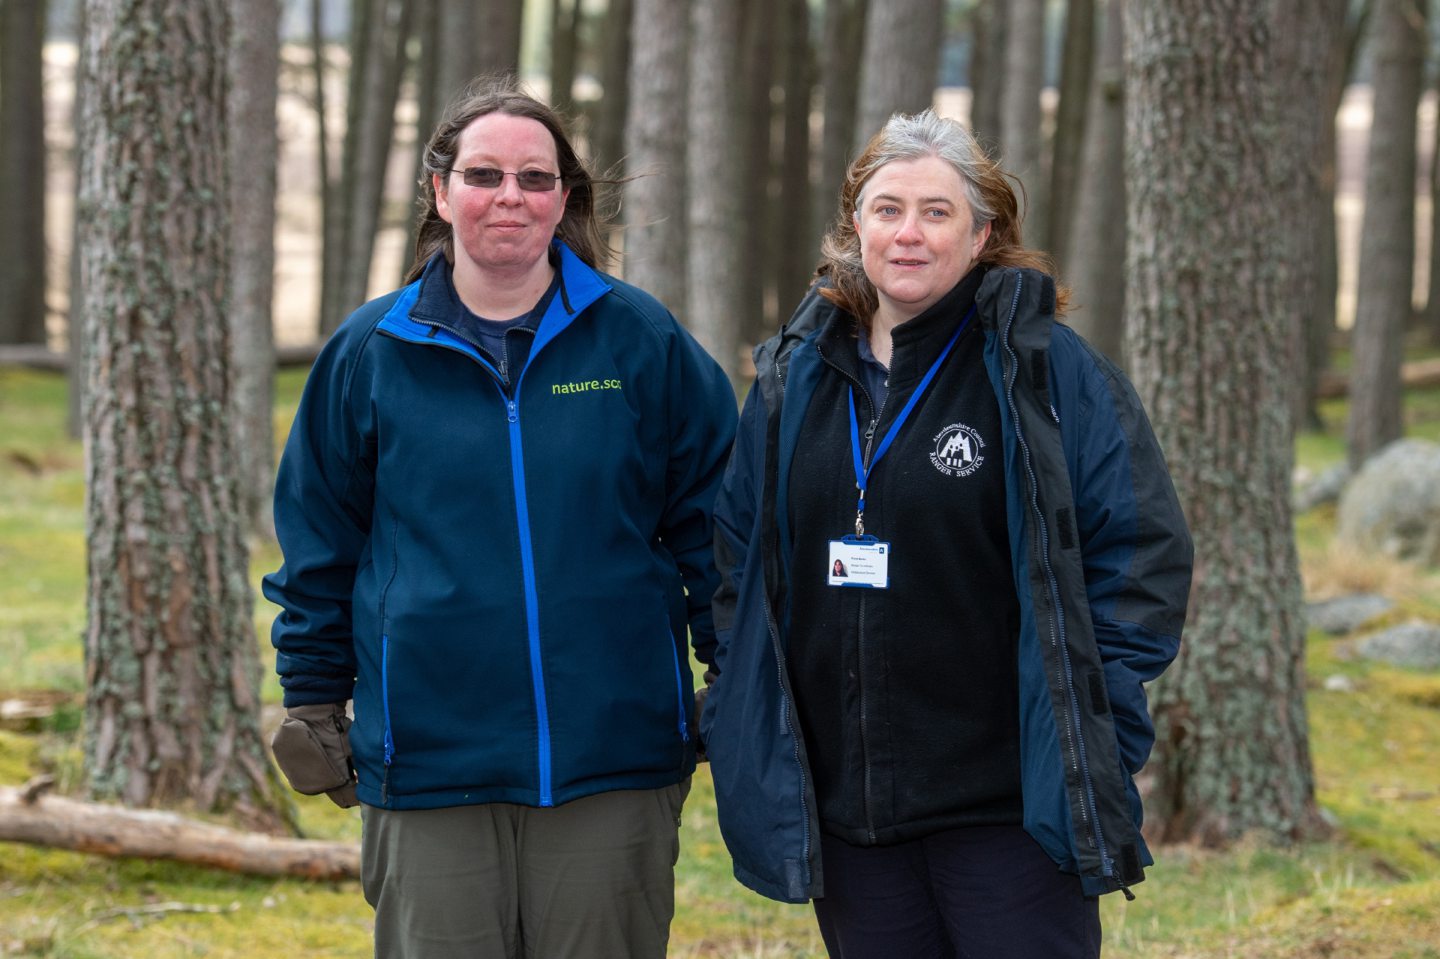 Aberdeenshire Council's ranger service coordinator Fiona Banks alongside Kirstin Mair, reserve manager at the Muir of Dinnet National Nature Reserve. 